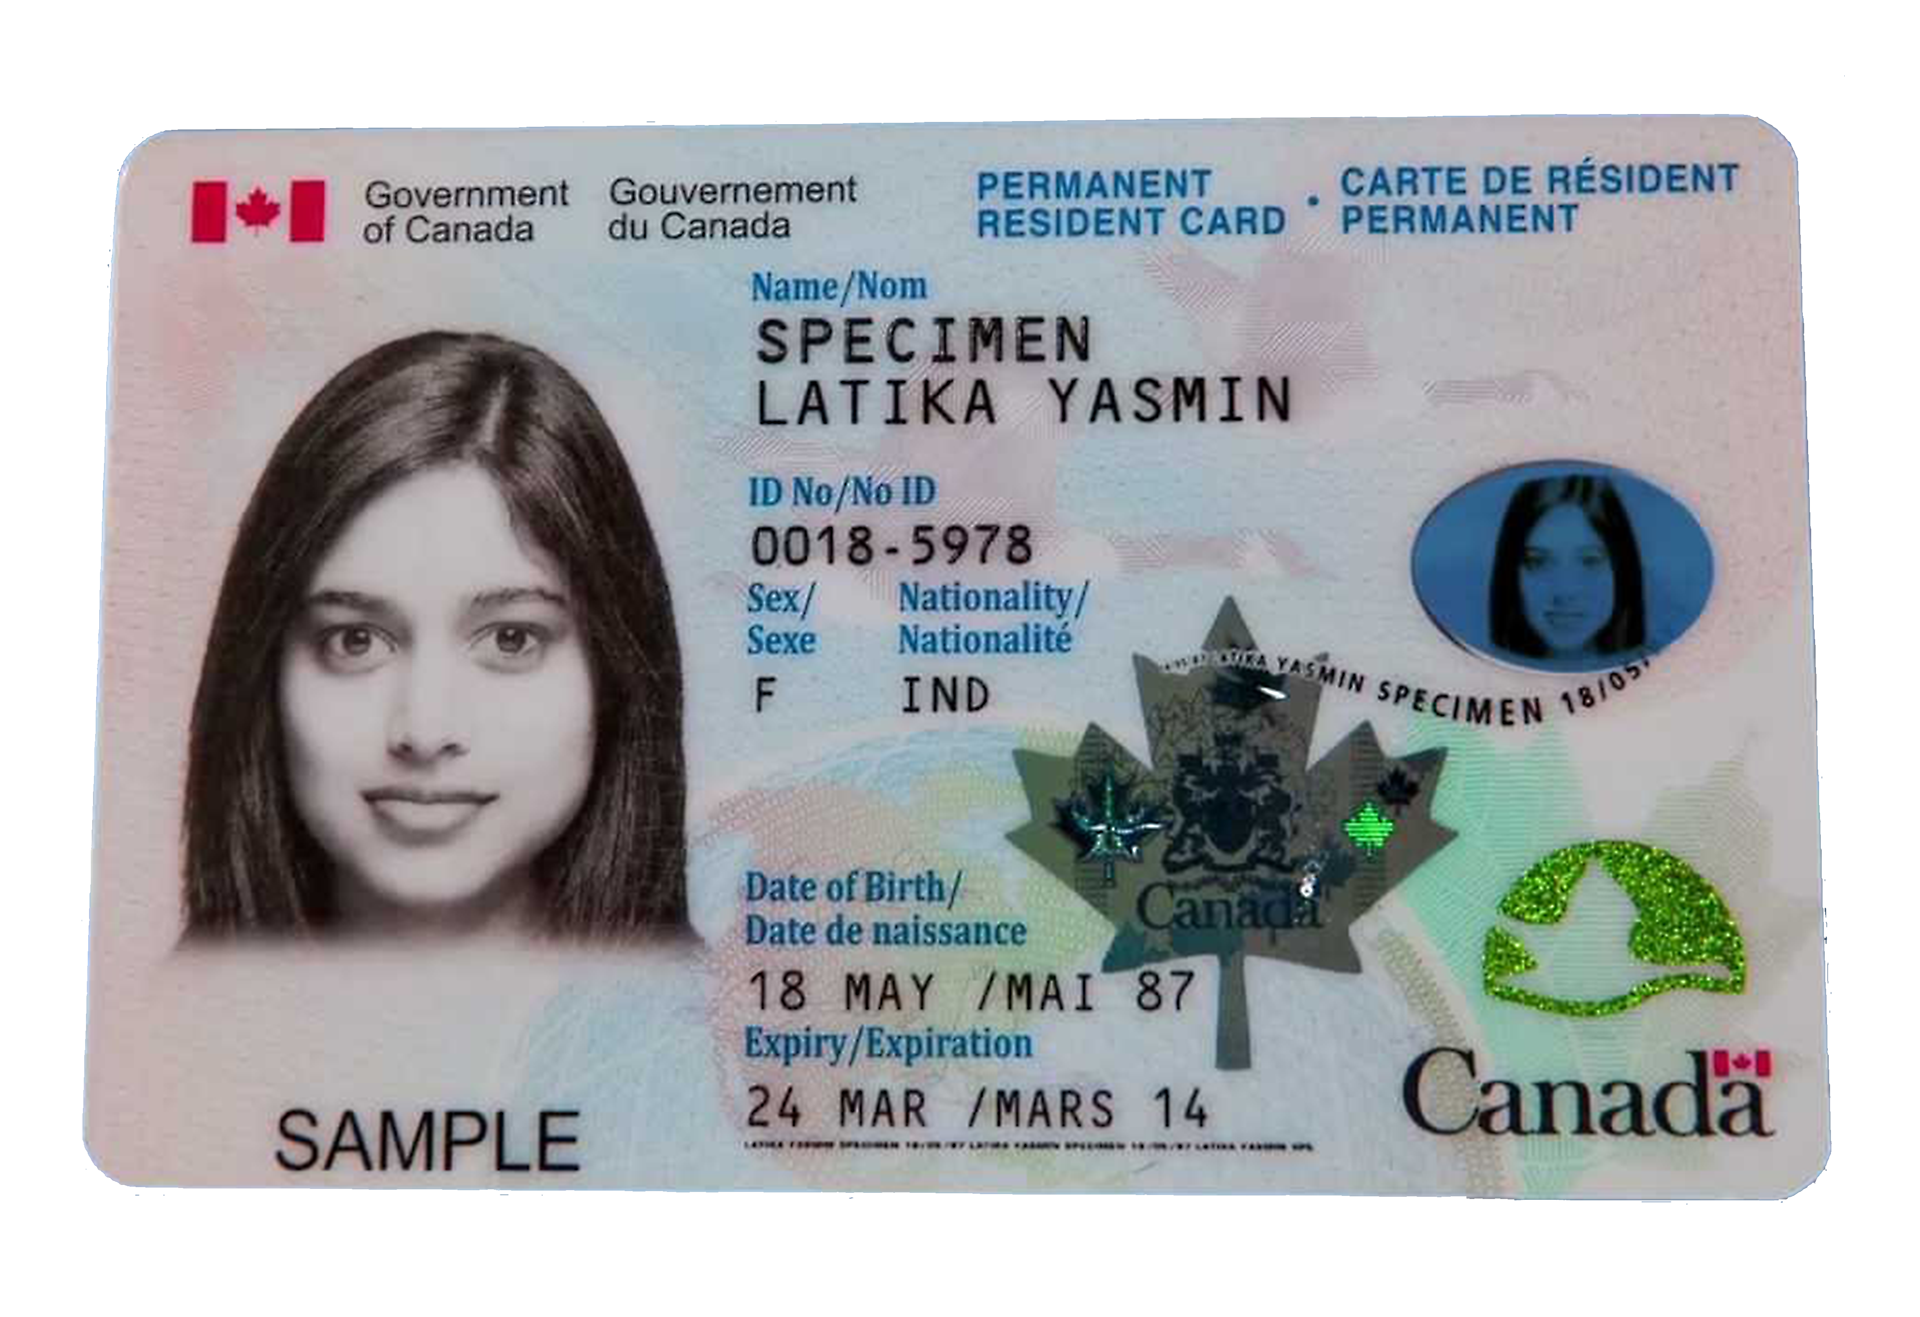 Canada “Green Card”